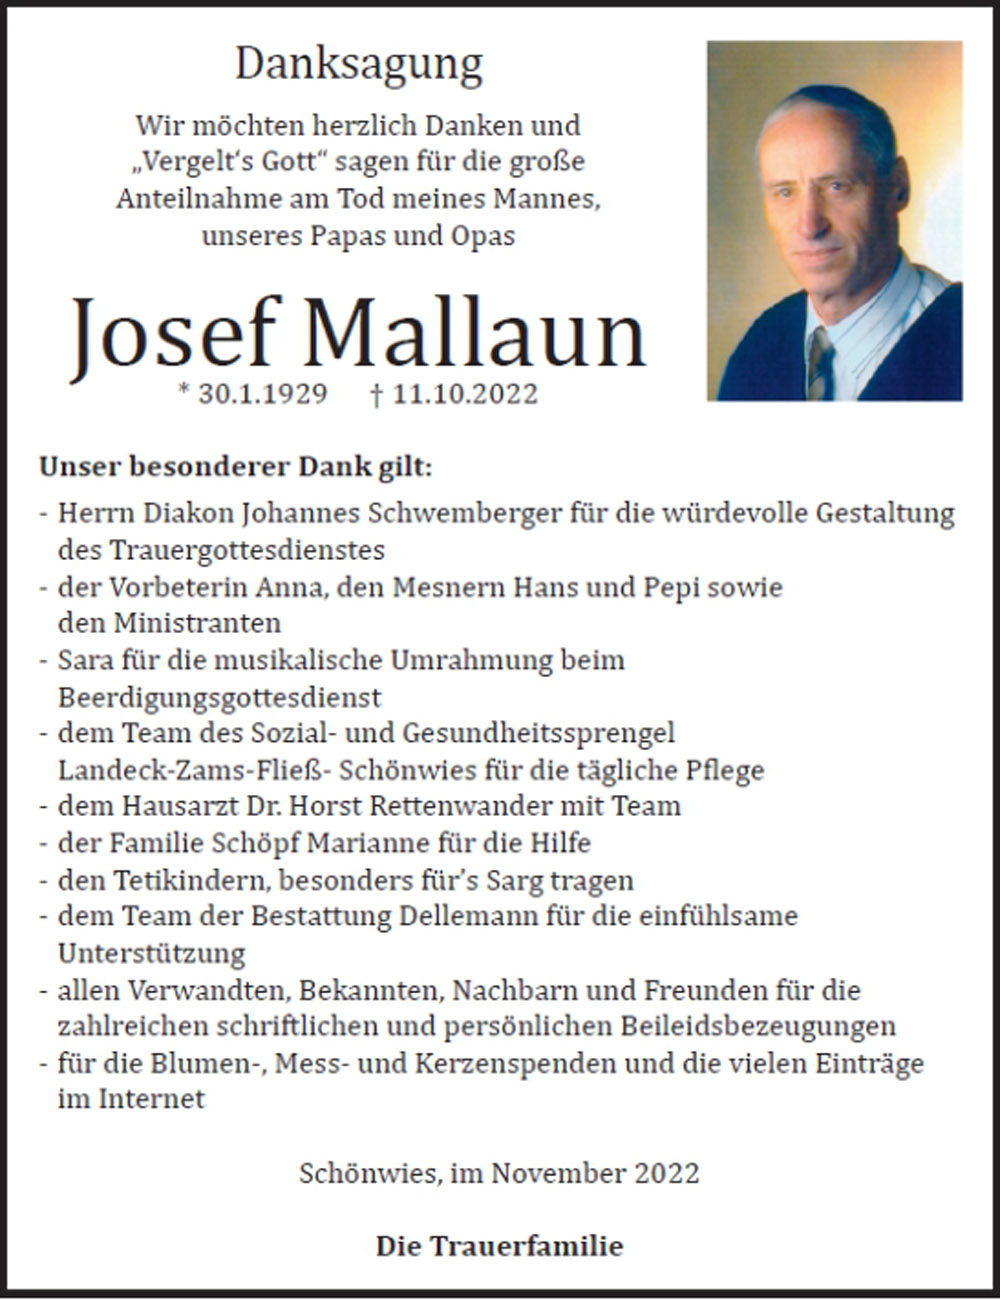 Josef Mallaun 